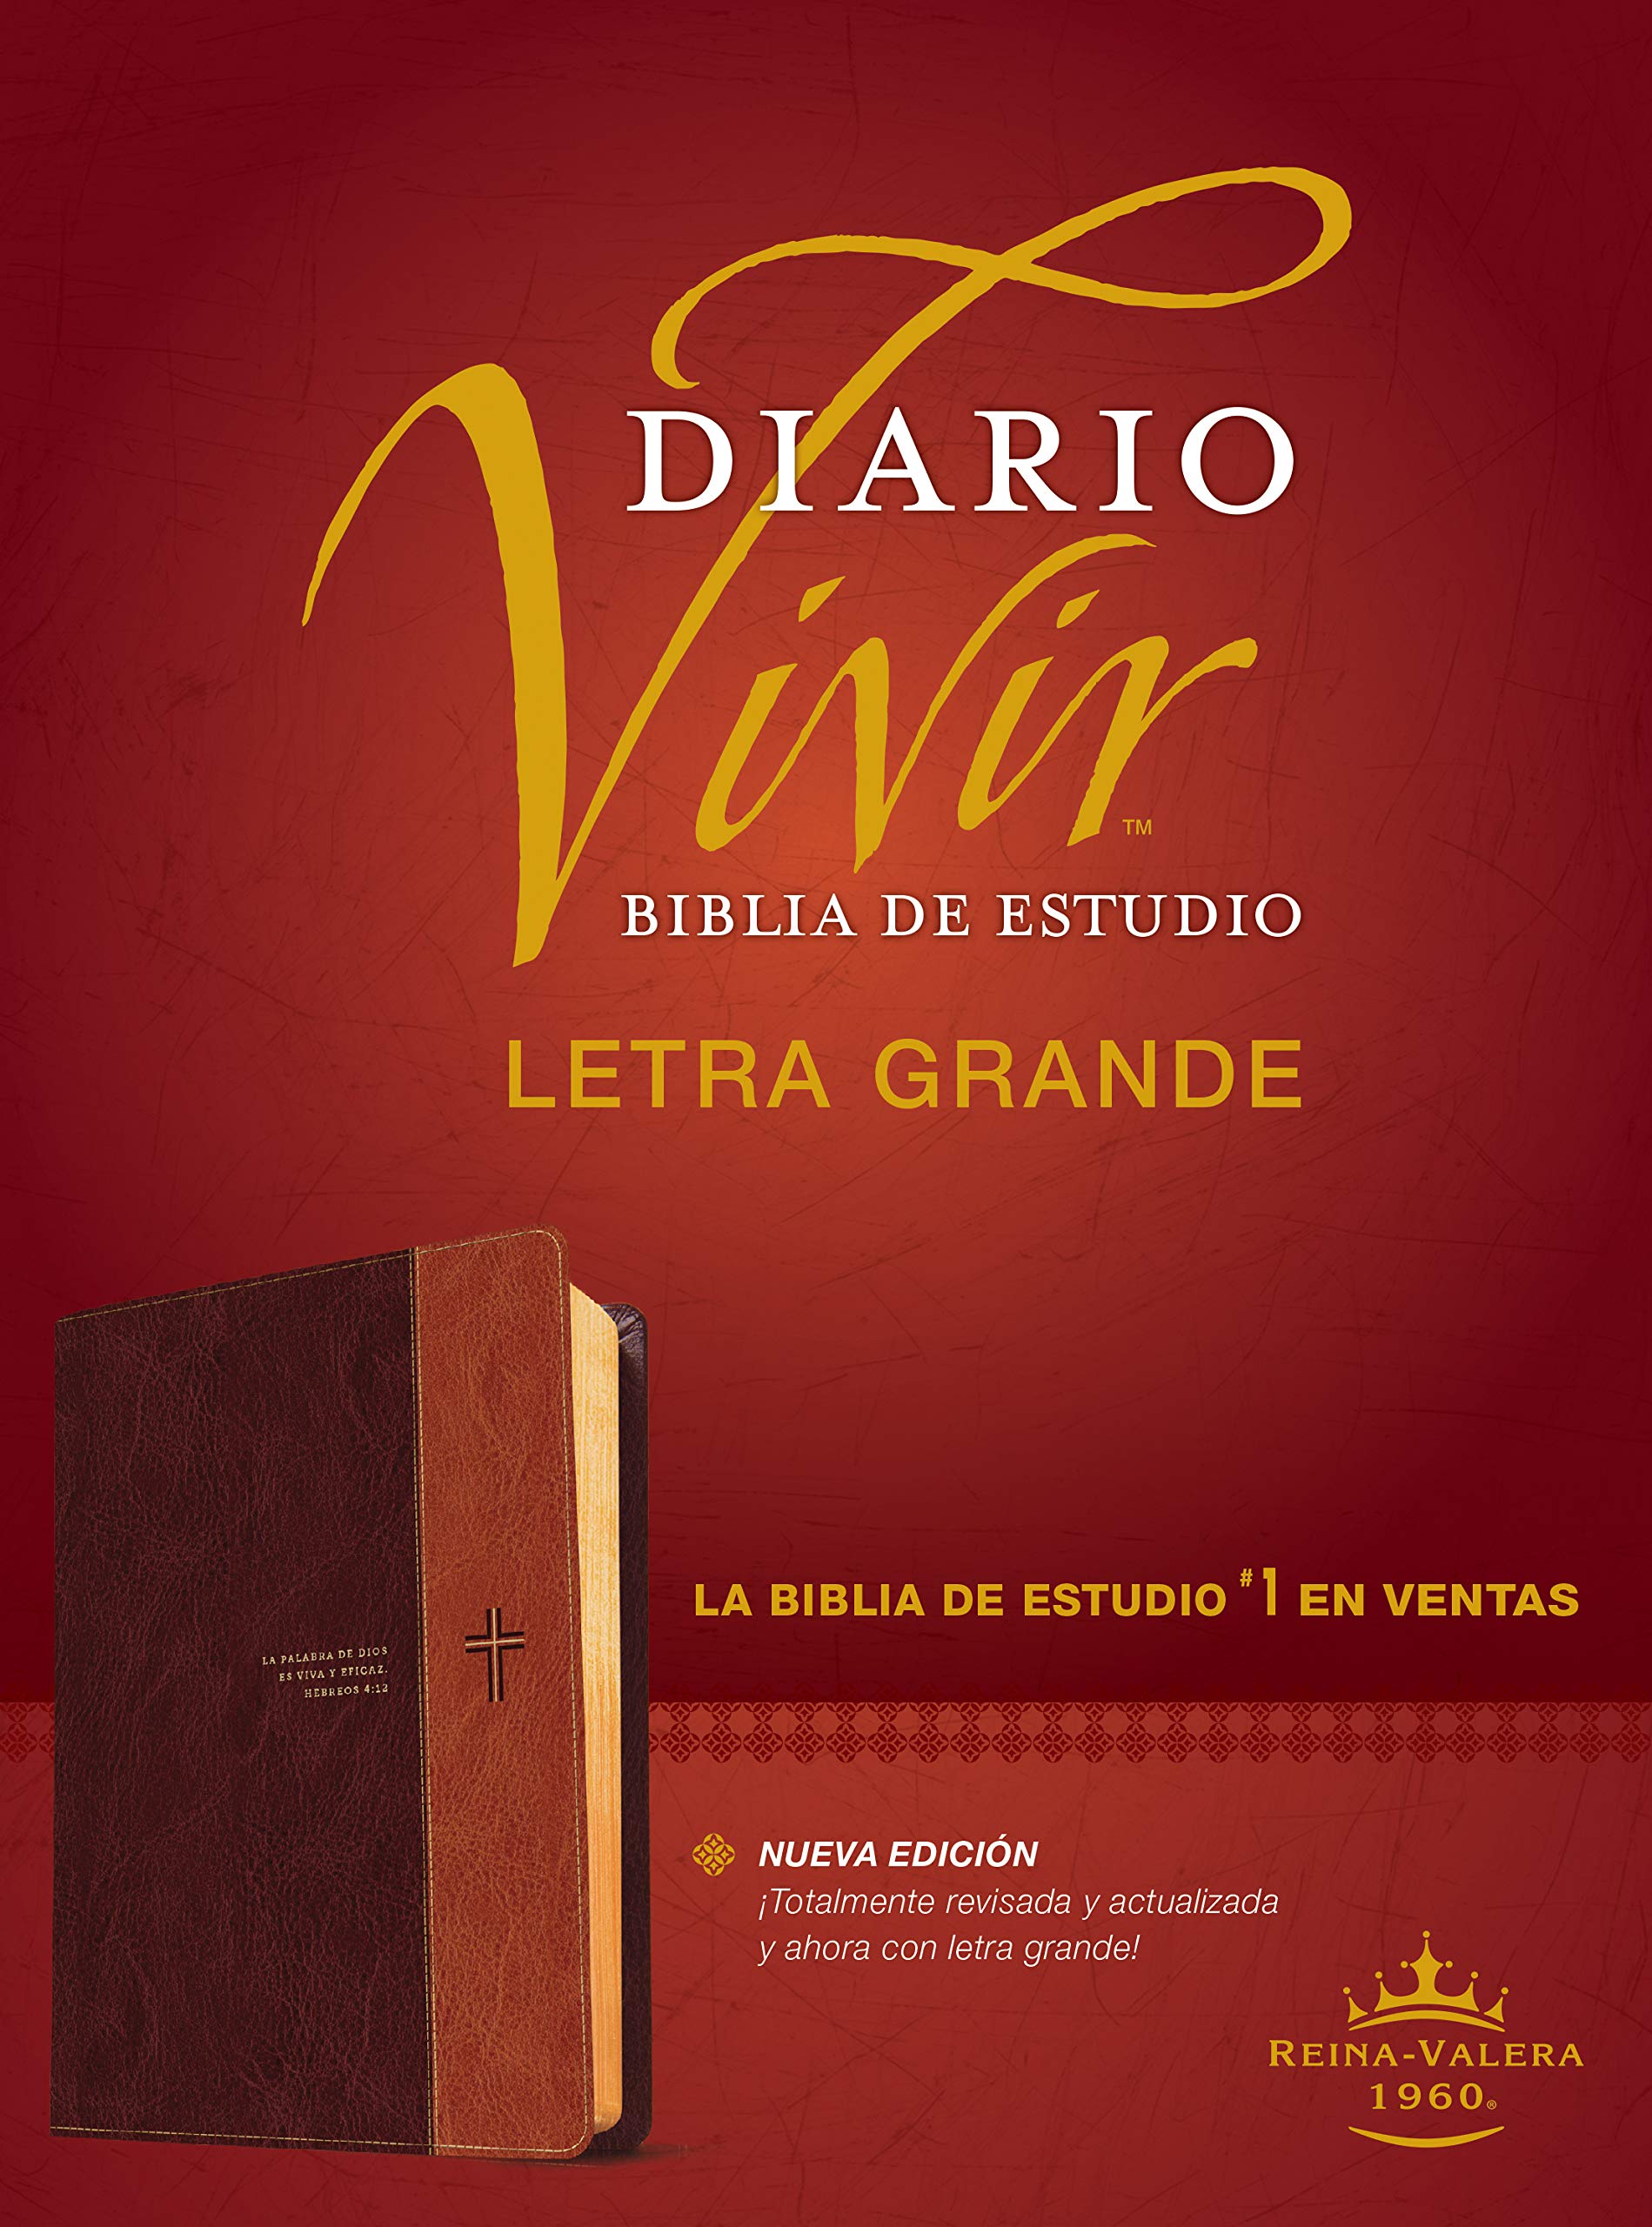 Biblia RVR1960 Estudio del diario vivir cafe/cafe claro Letra grande - Librería Libros Cristianos - Biblia